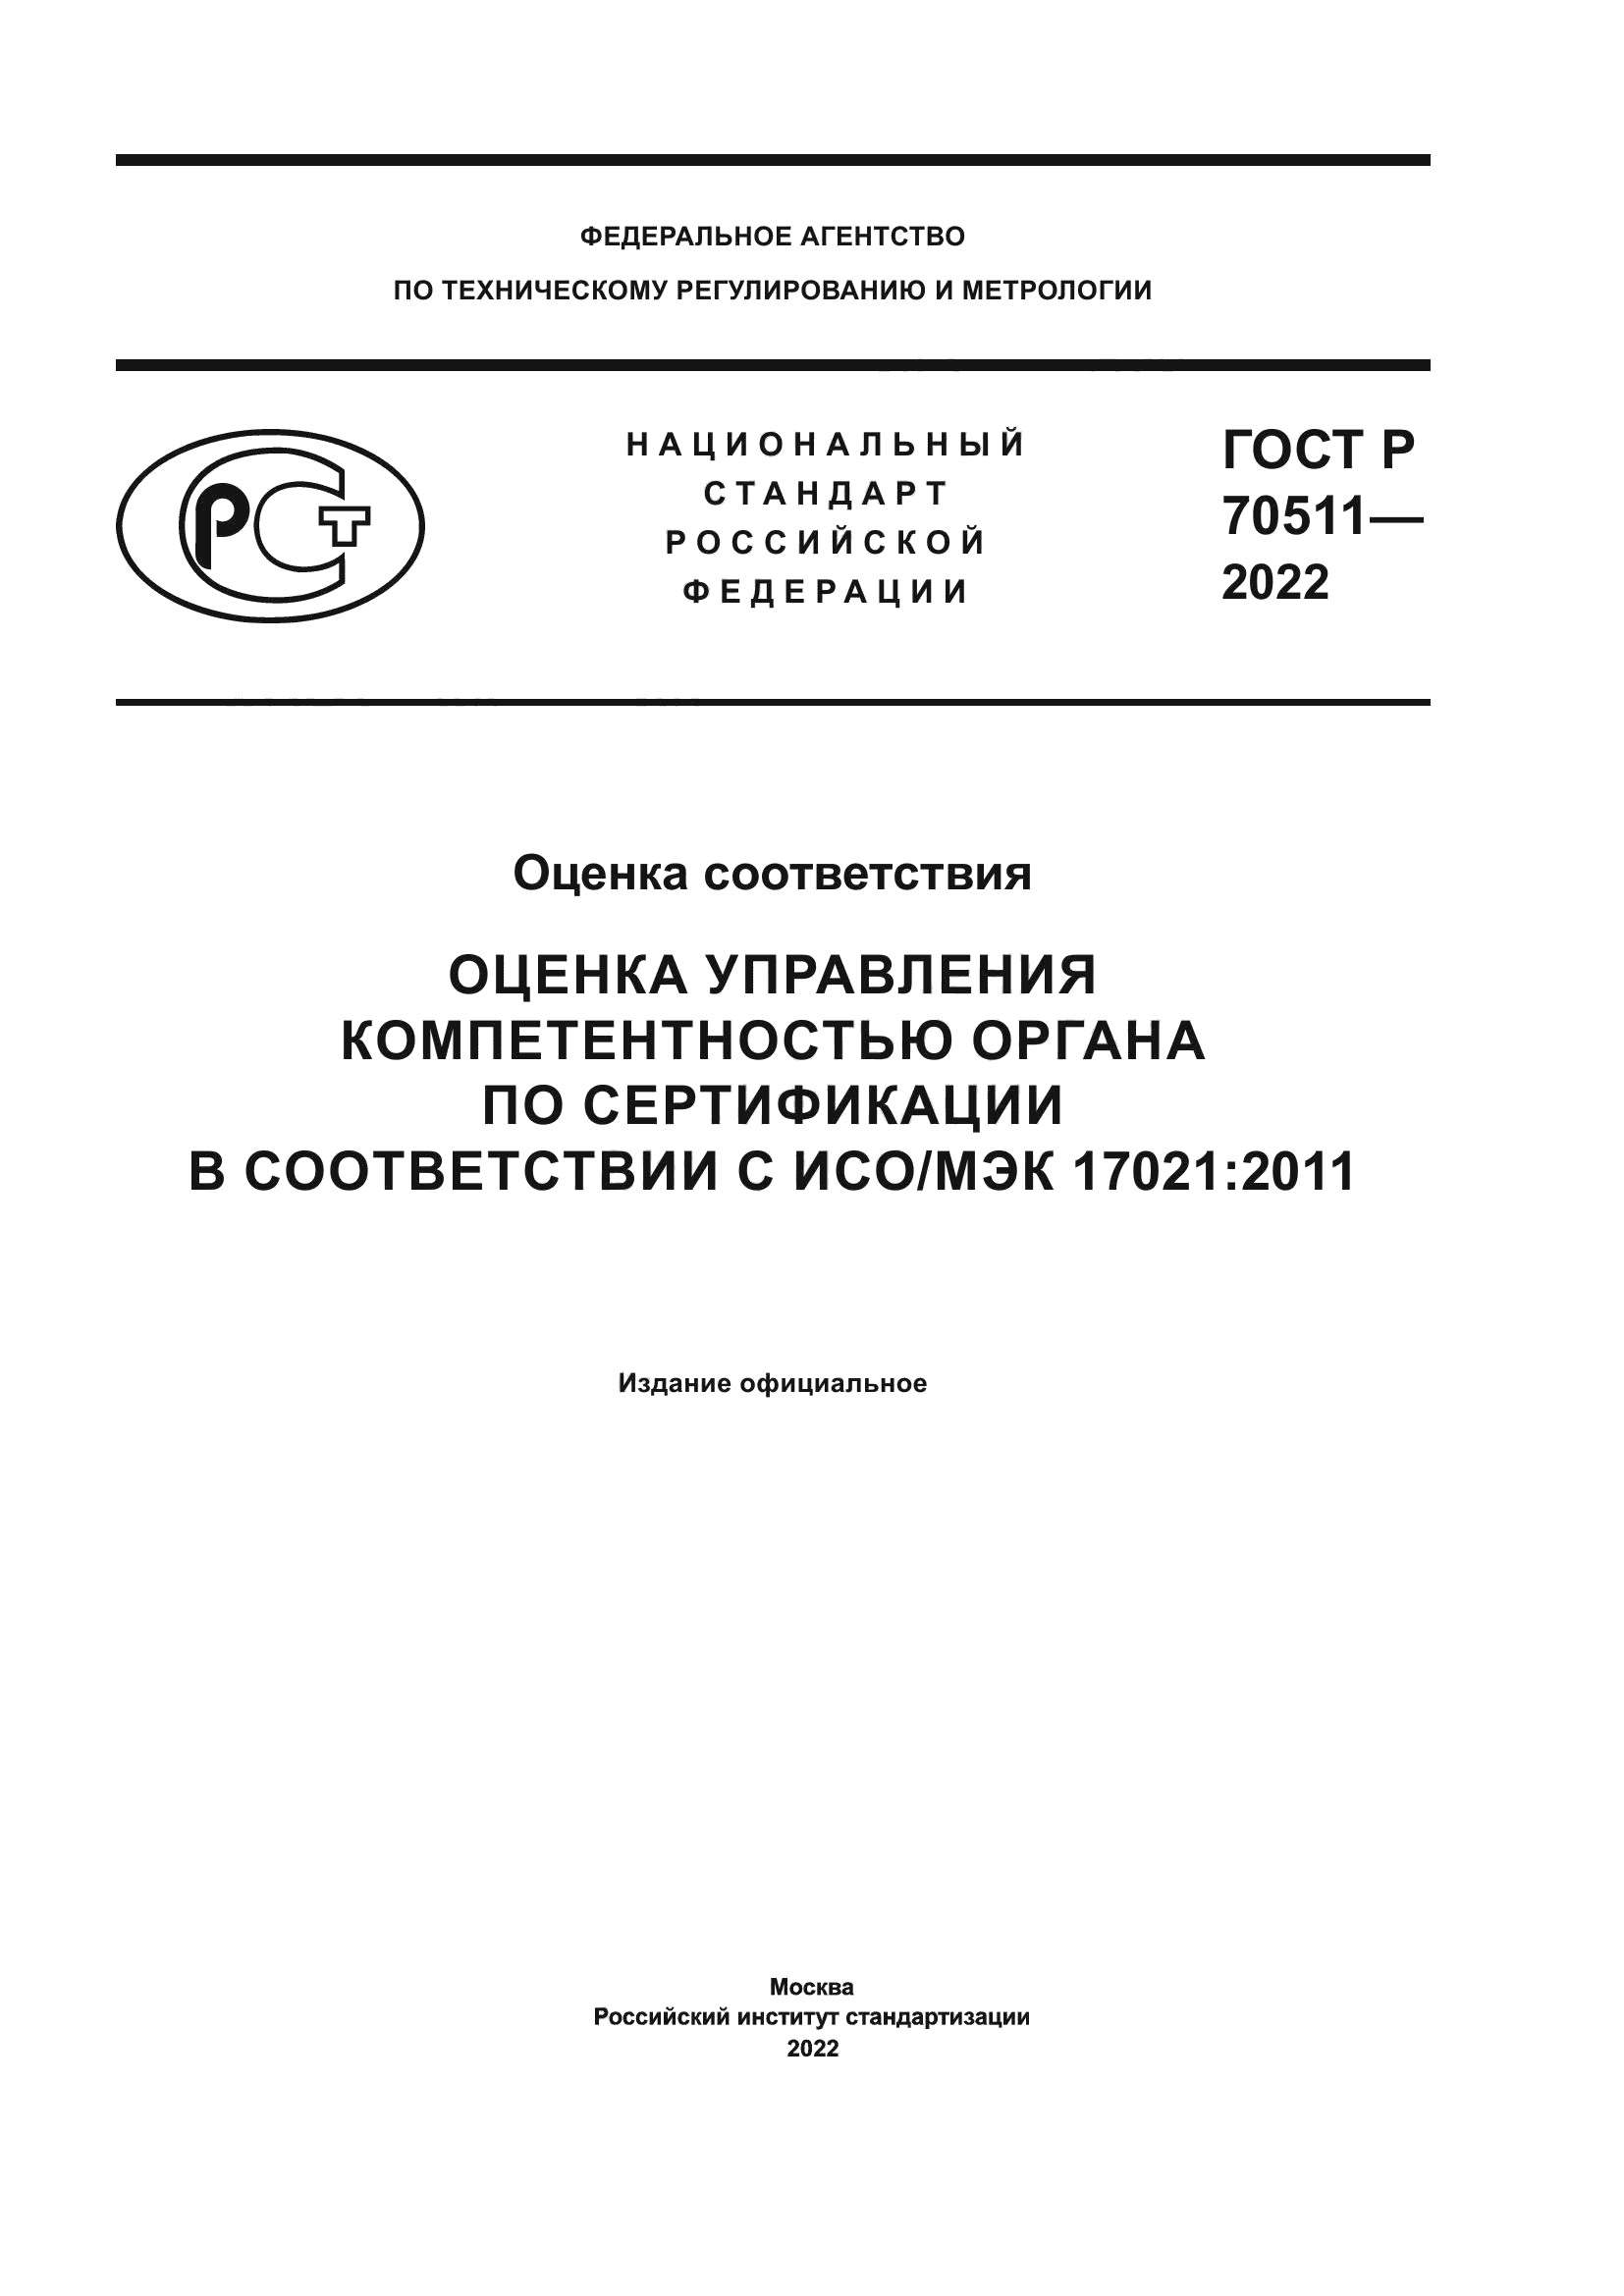 ГОСТ Р 70511-2022